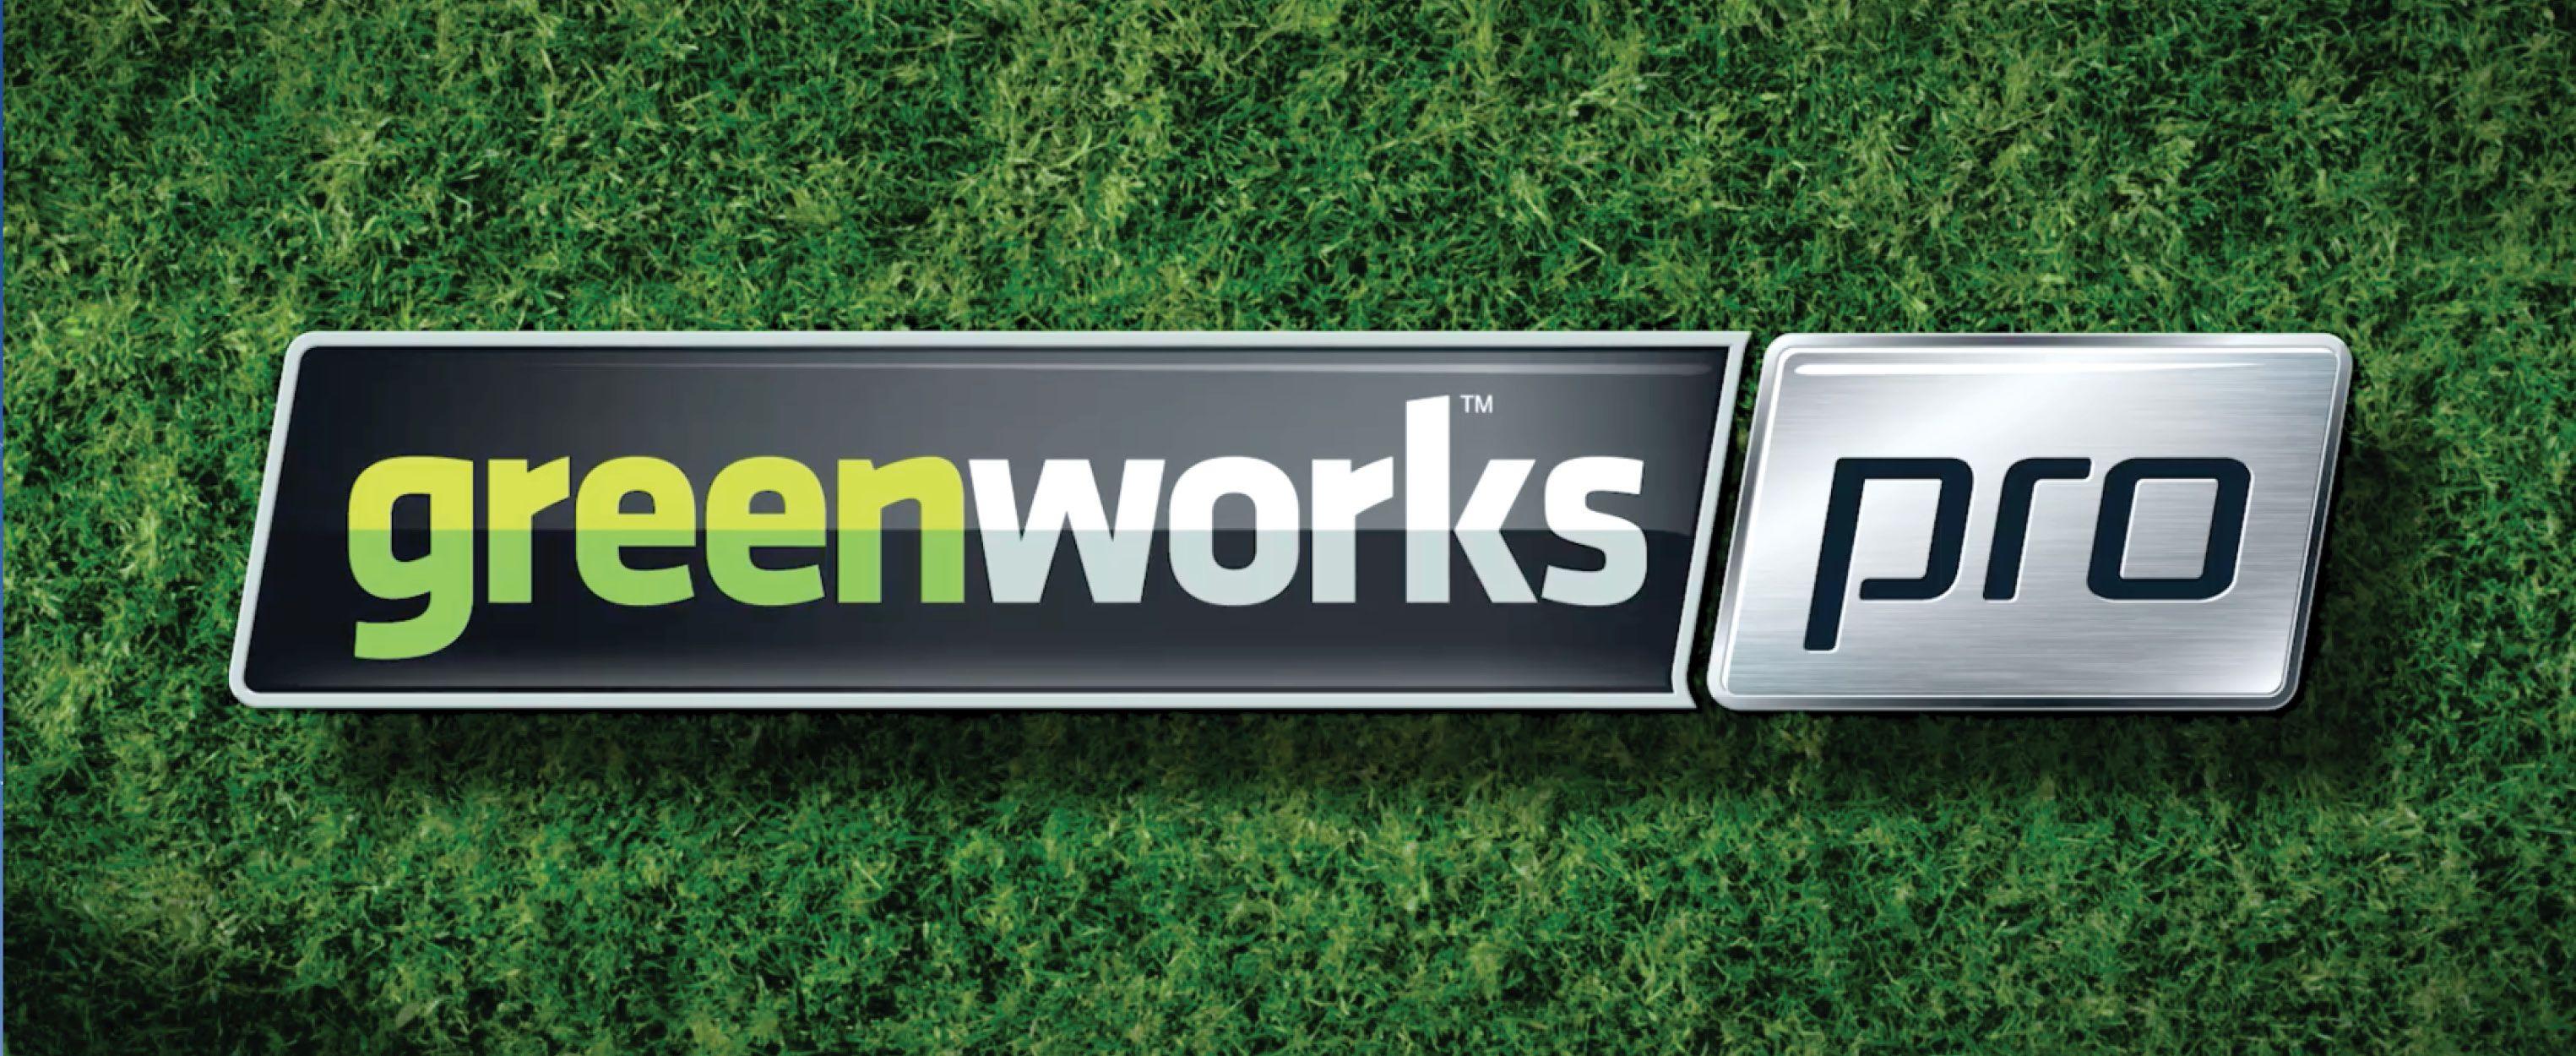 Greenworks Logo - Amazon.com: Greenworks